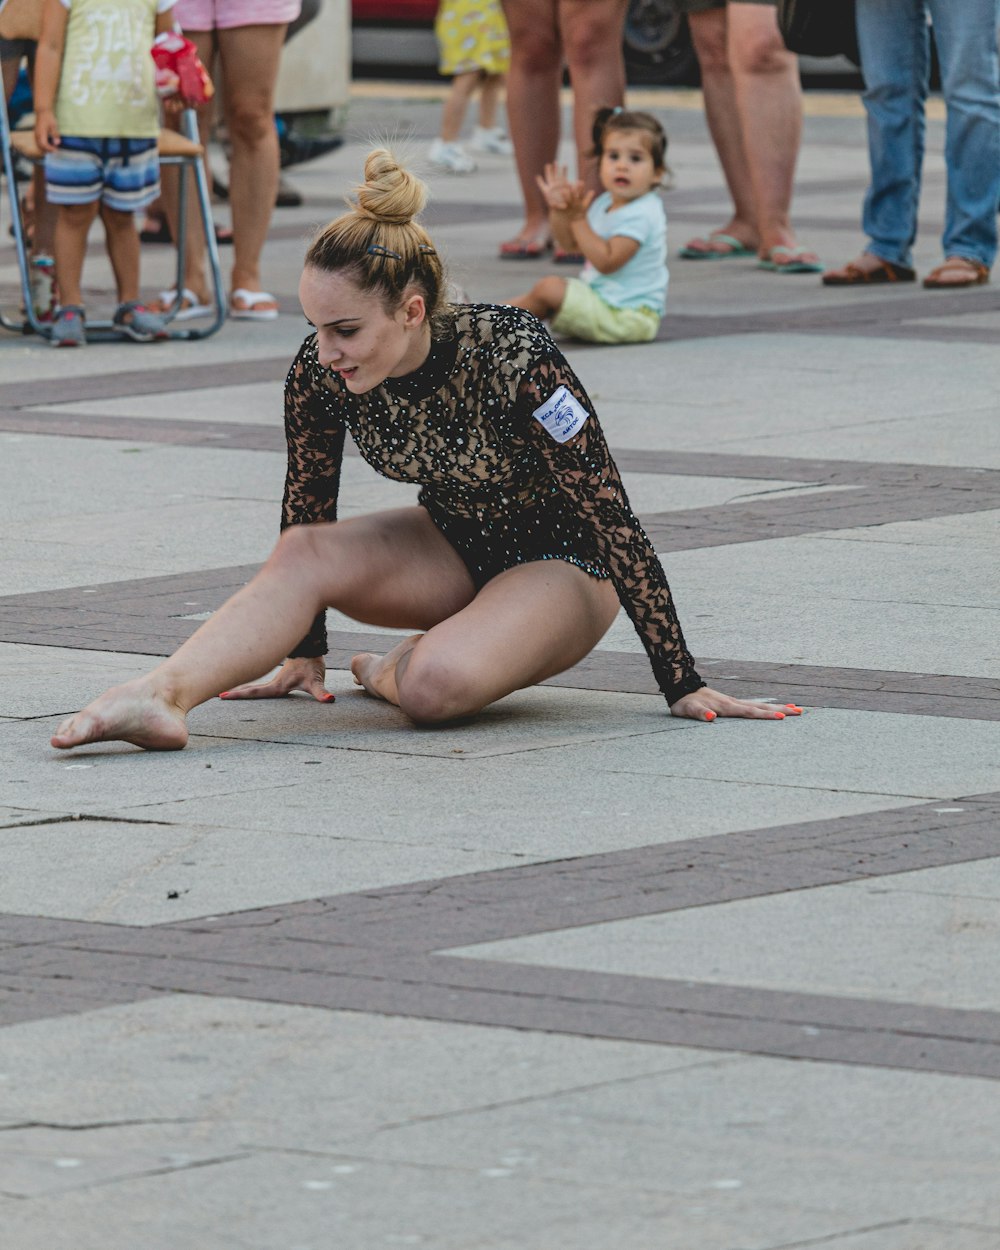 woman sitting on ground